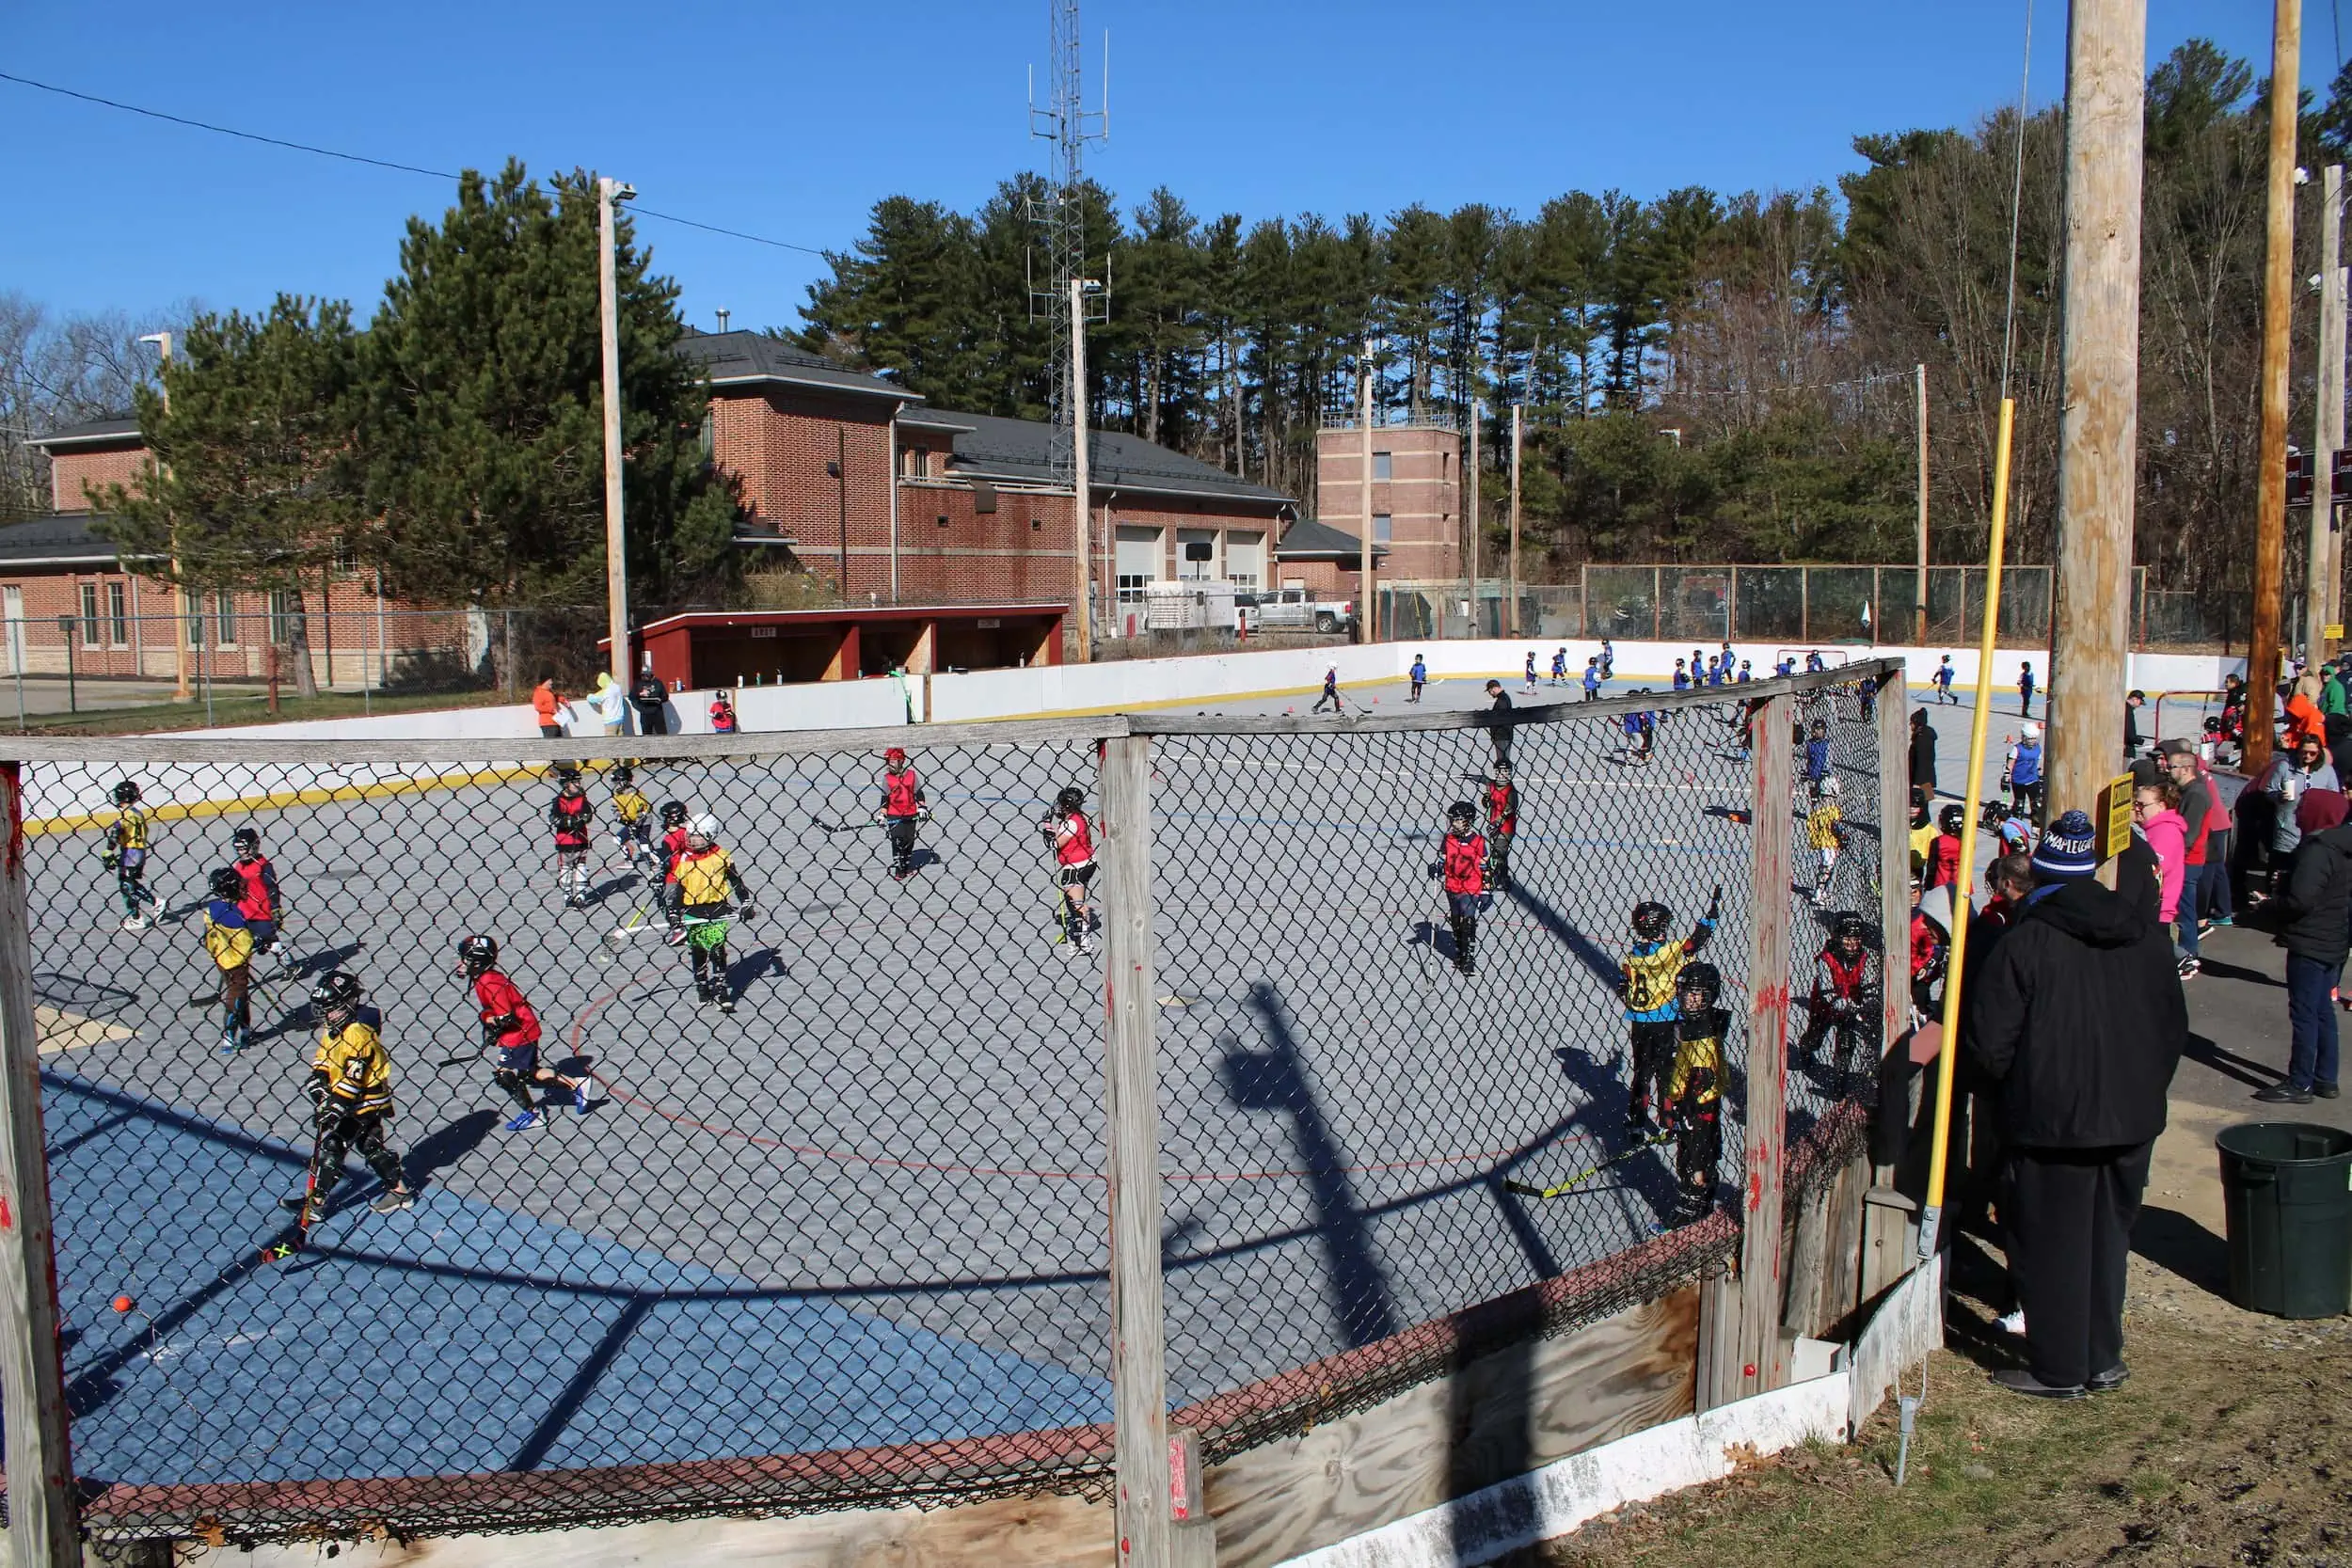 Dek hockey leagues run on popularity